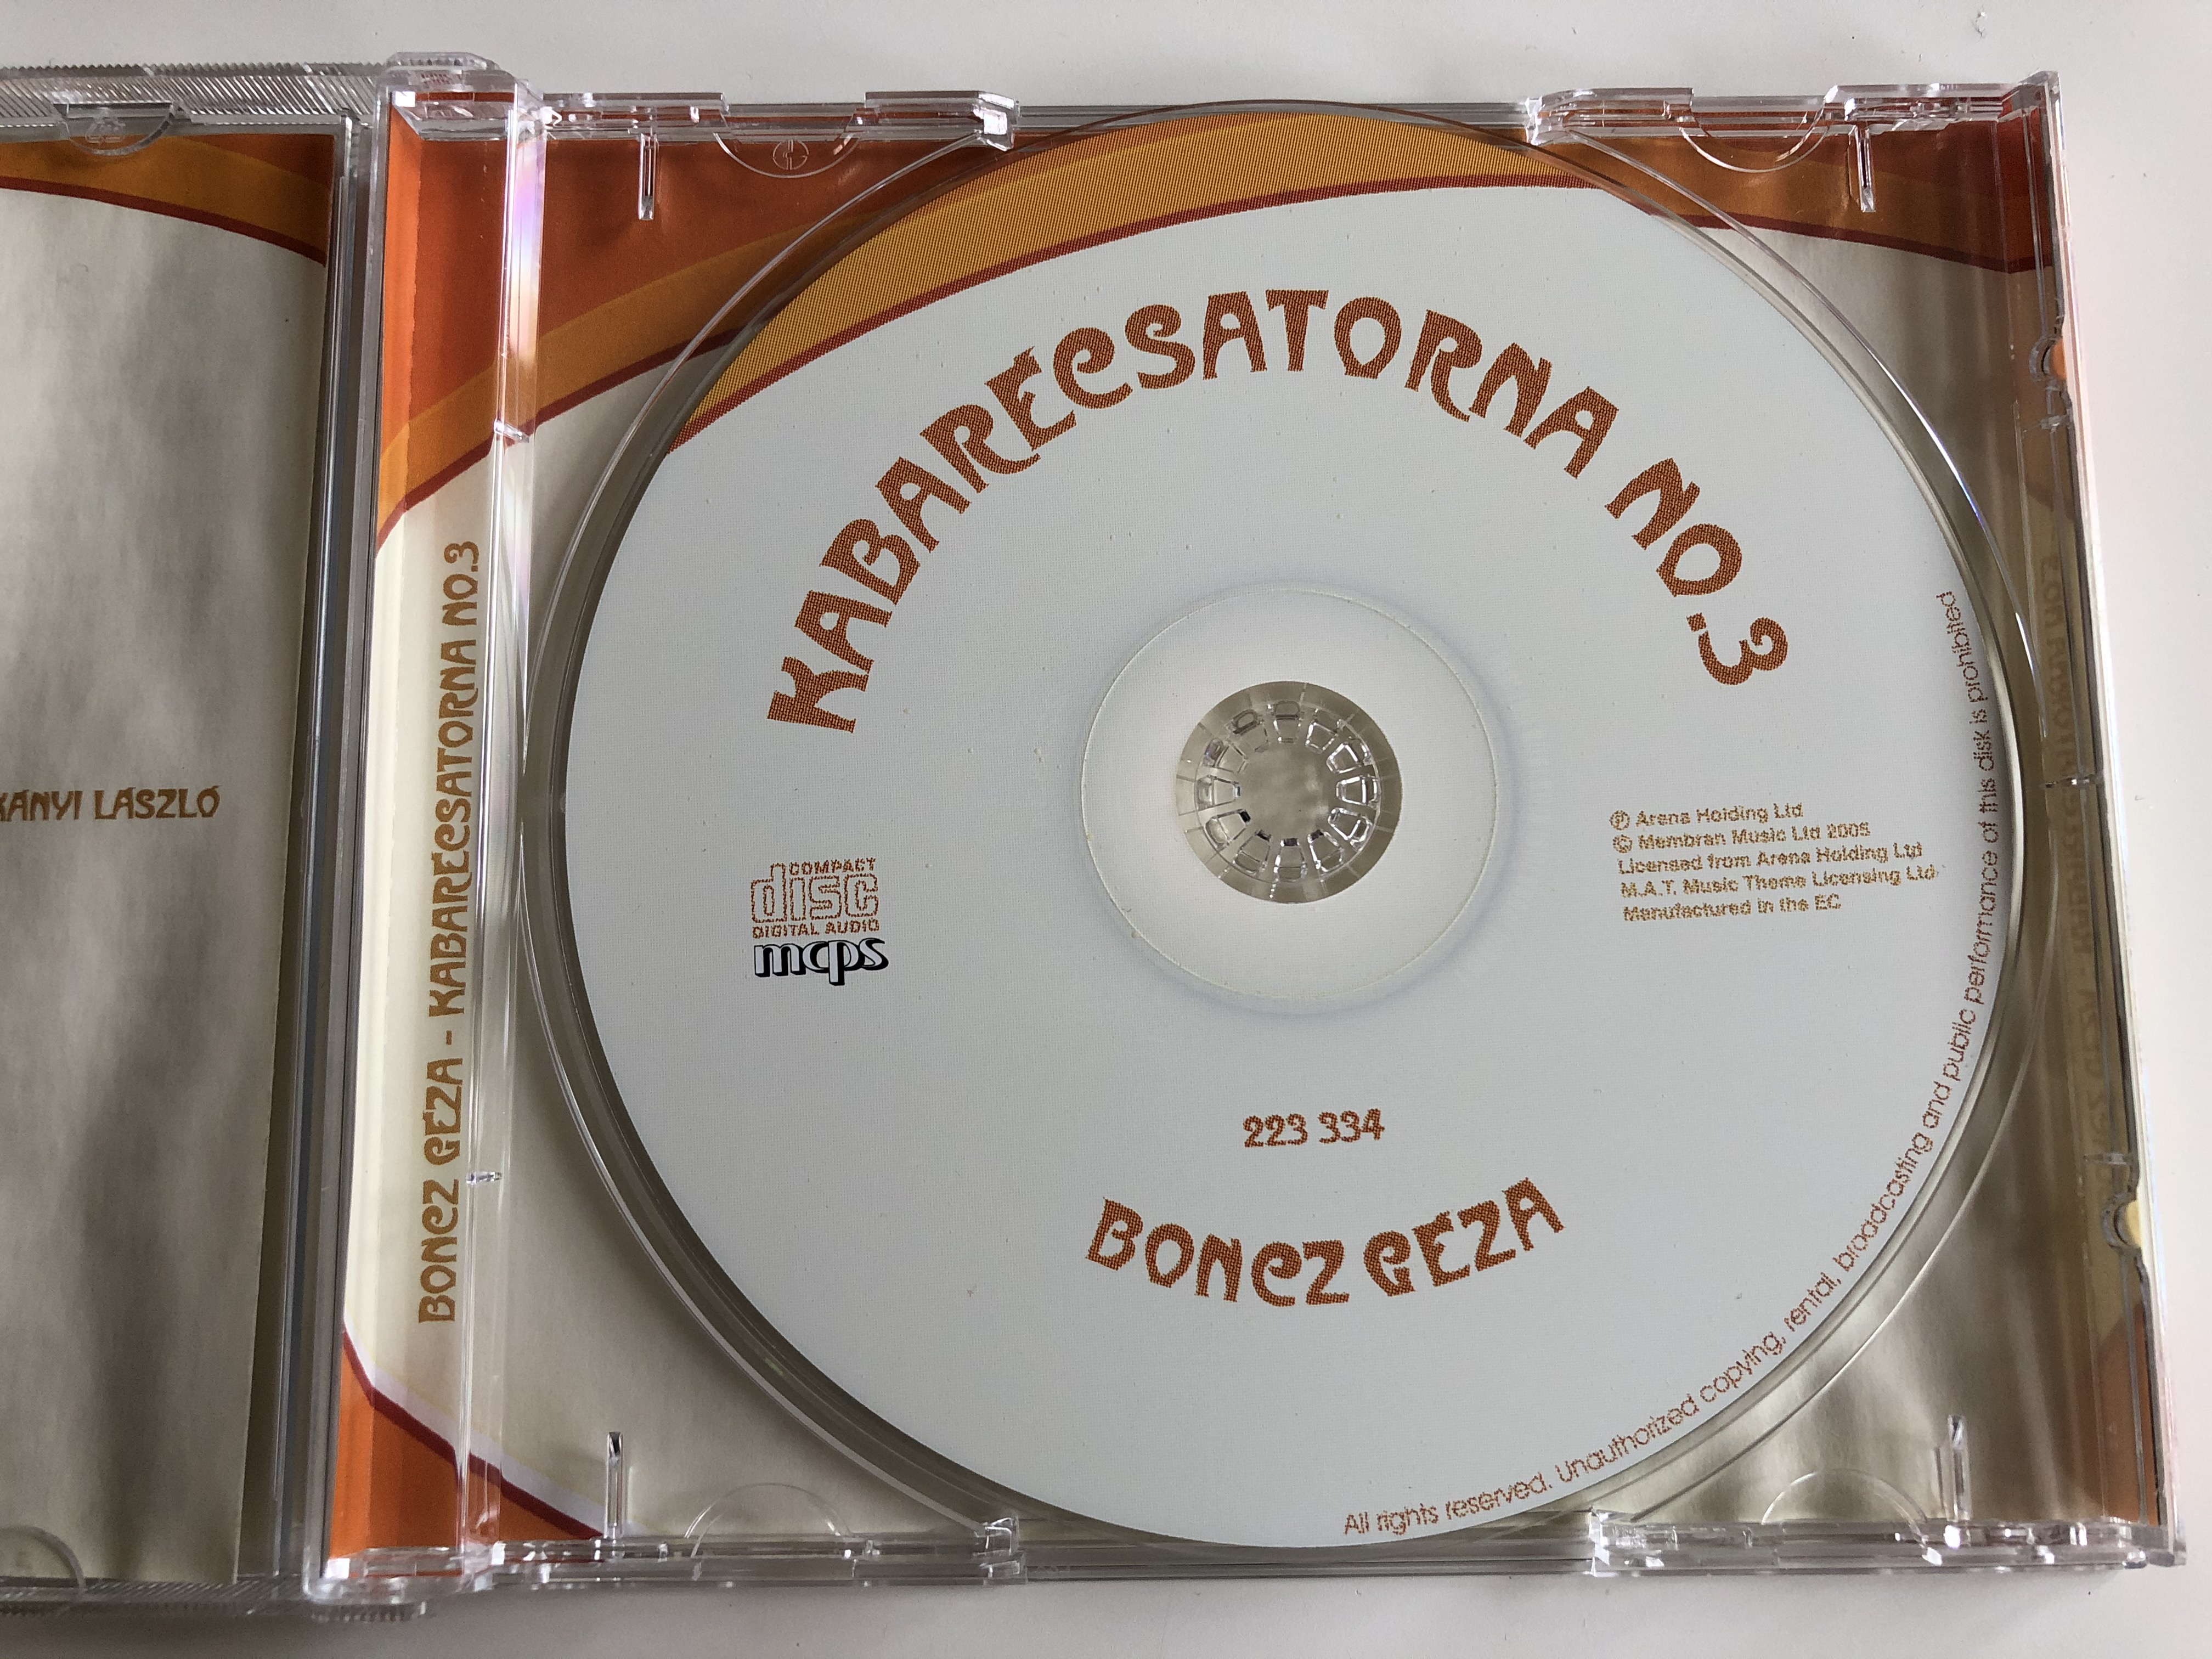 kabar-csatorna-no.-3-bones-geza-szerzoi-lemeze-kozremukodik-bodrogi-gyula-garas-dezso-csala-zsuzsa-csakanyi-laszlo-membran-music-audio-cd-2005-223-334-3-.jpg